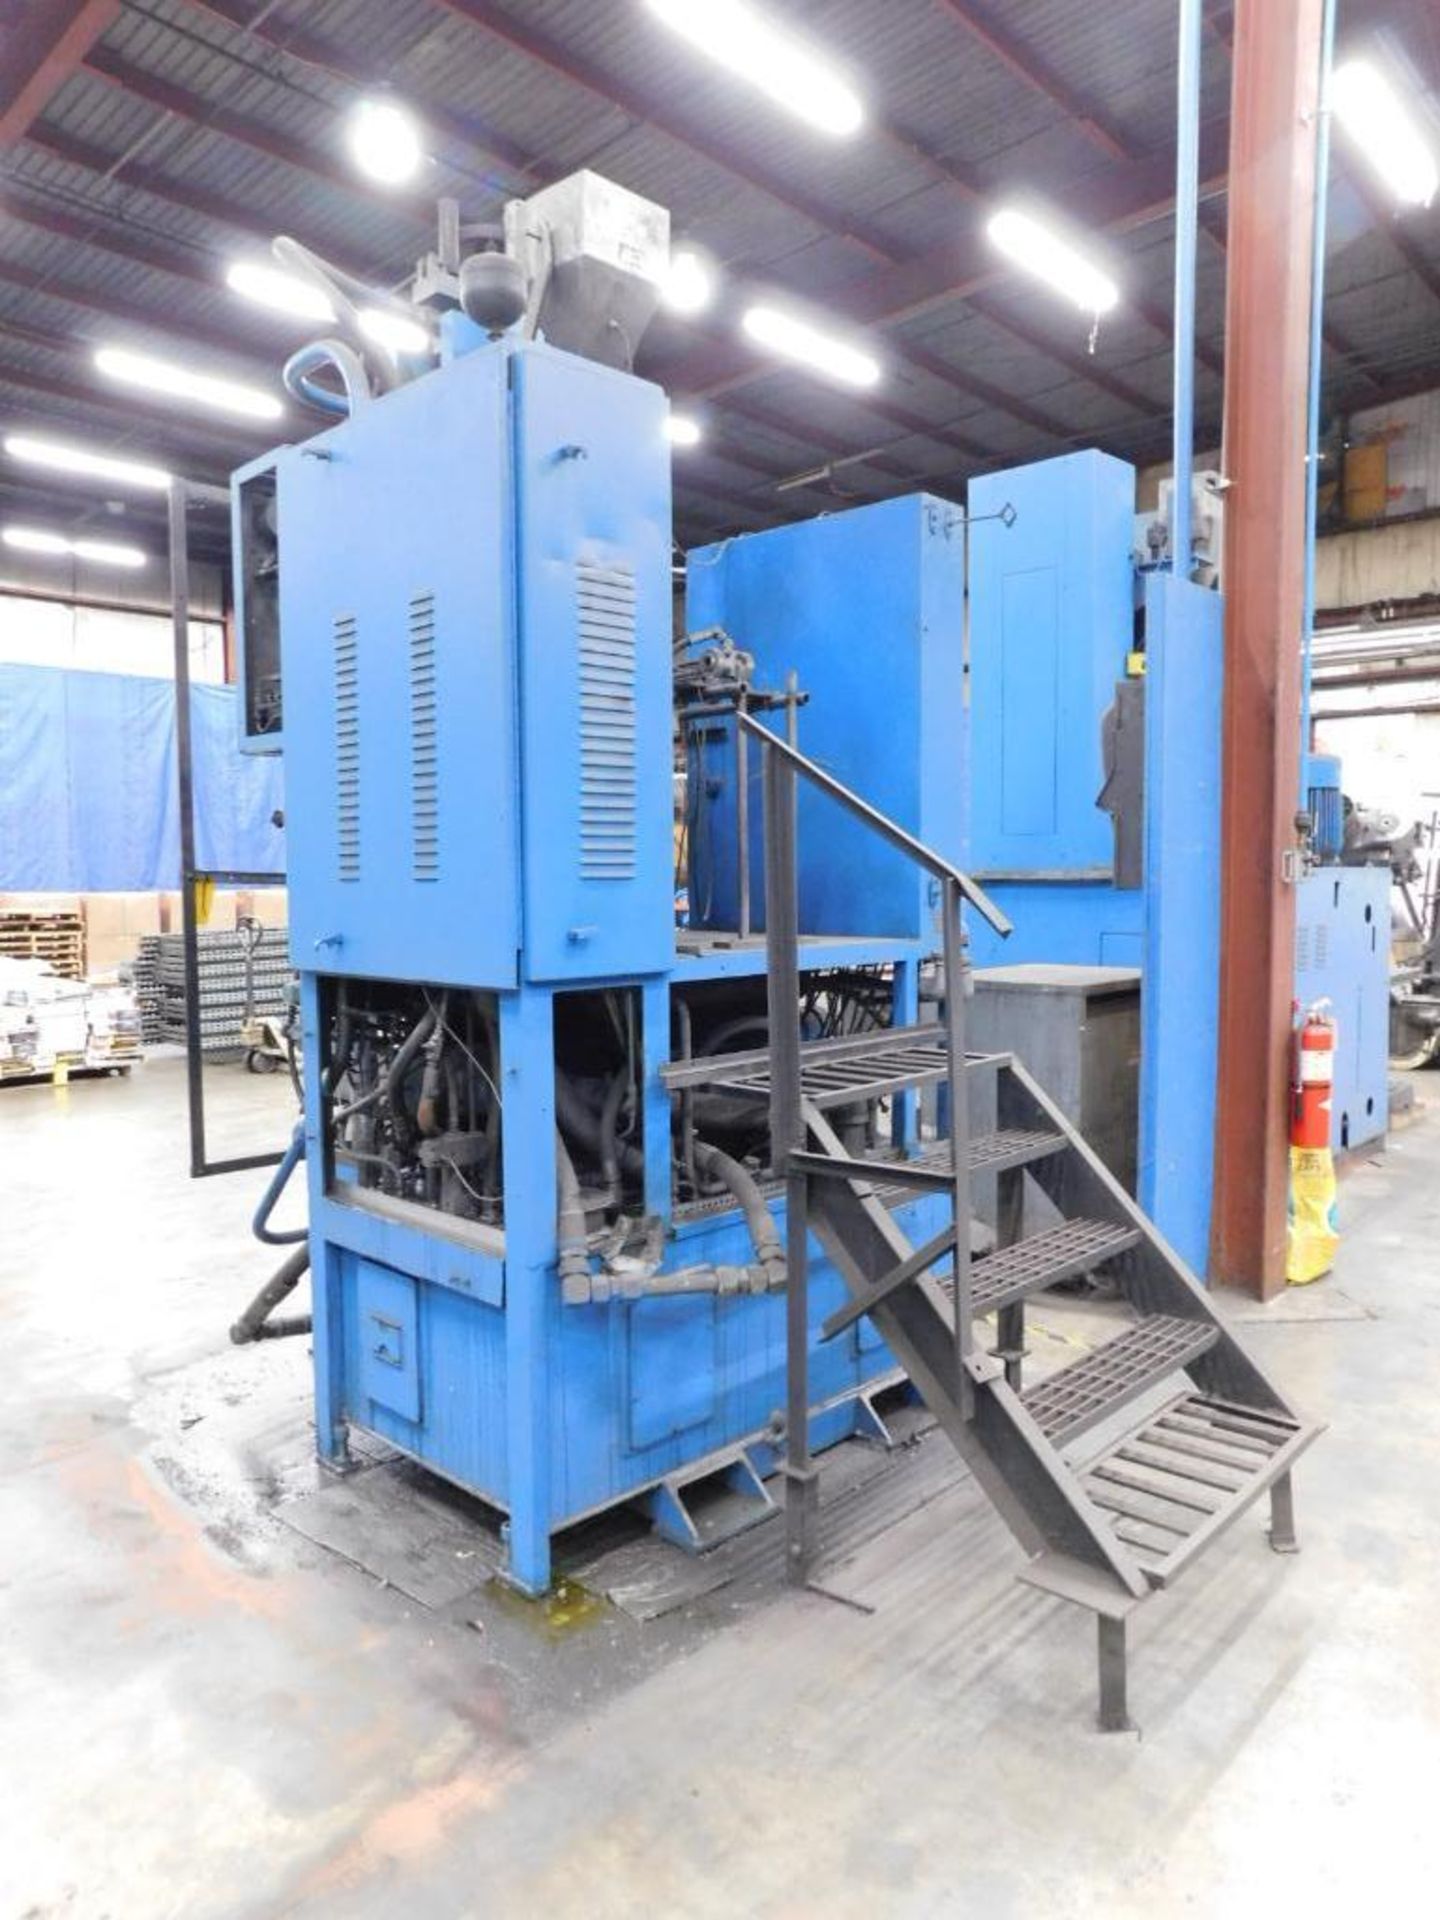 Hydramet Powder Compacting Press, Hydraulic, Model HC-60, 60 Ton Maximum Pressing Force, 5" Maximum - Image 6 of 21